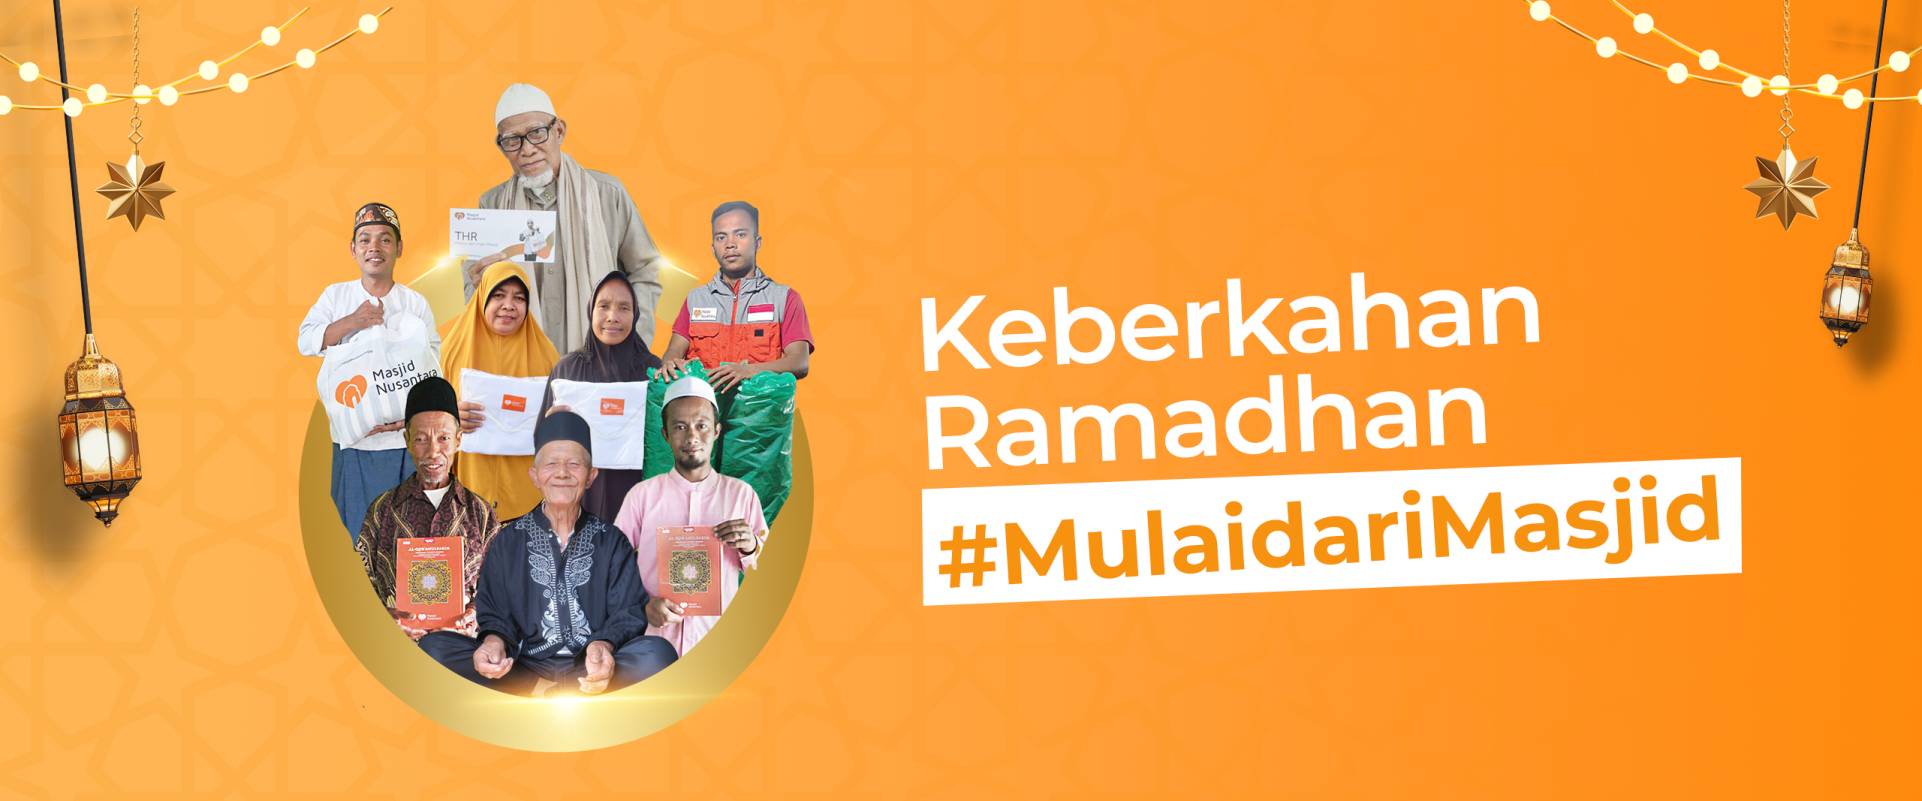 Keberkahan Ramadhan Mulai dari Masjid